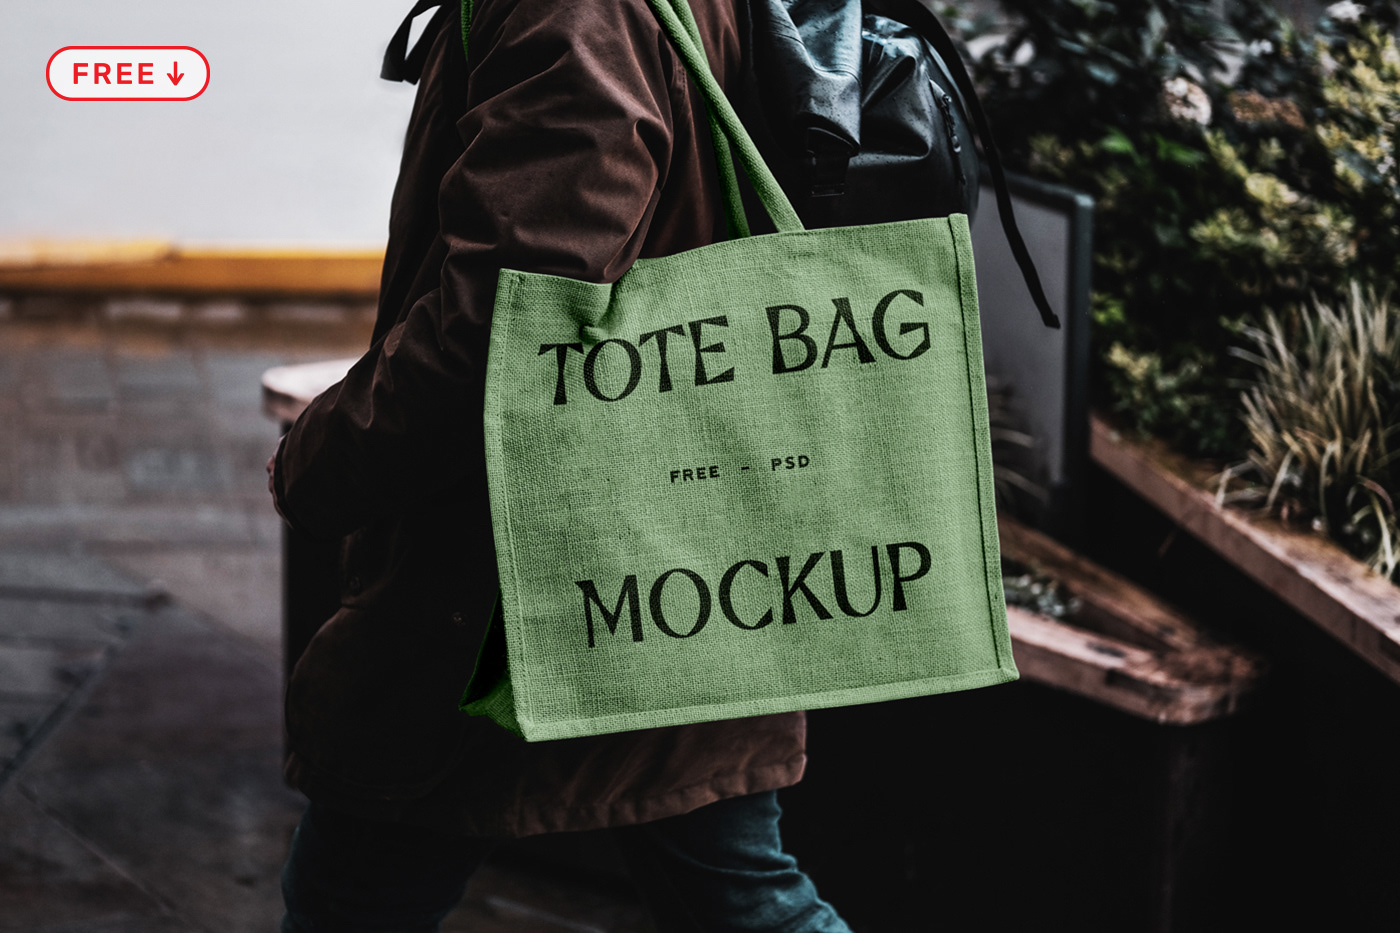 free Free Bag Mockup free mockup  psd Free Template free psd mockup free tempalte free download tote bag mockup eco bag mockup